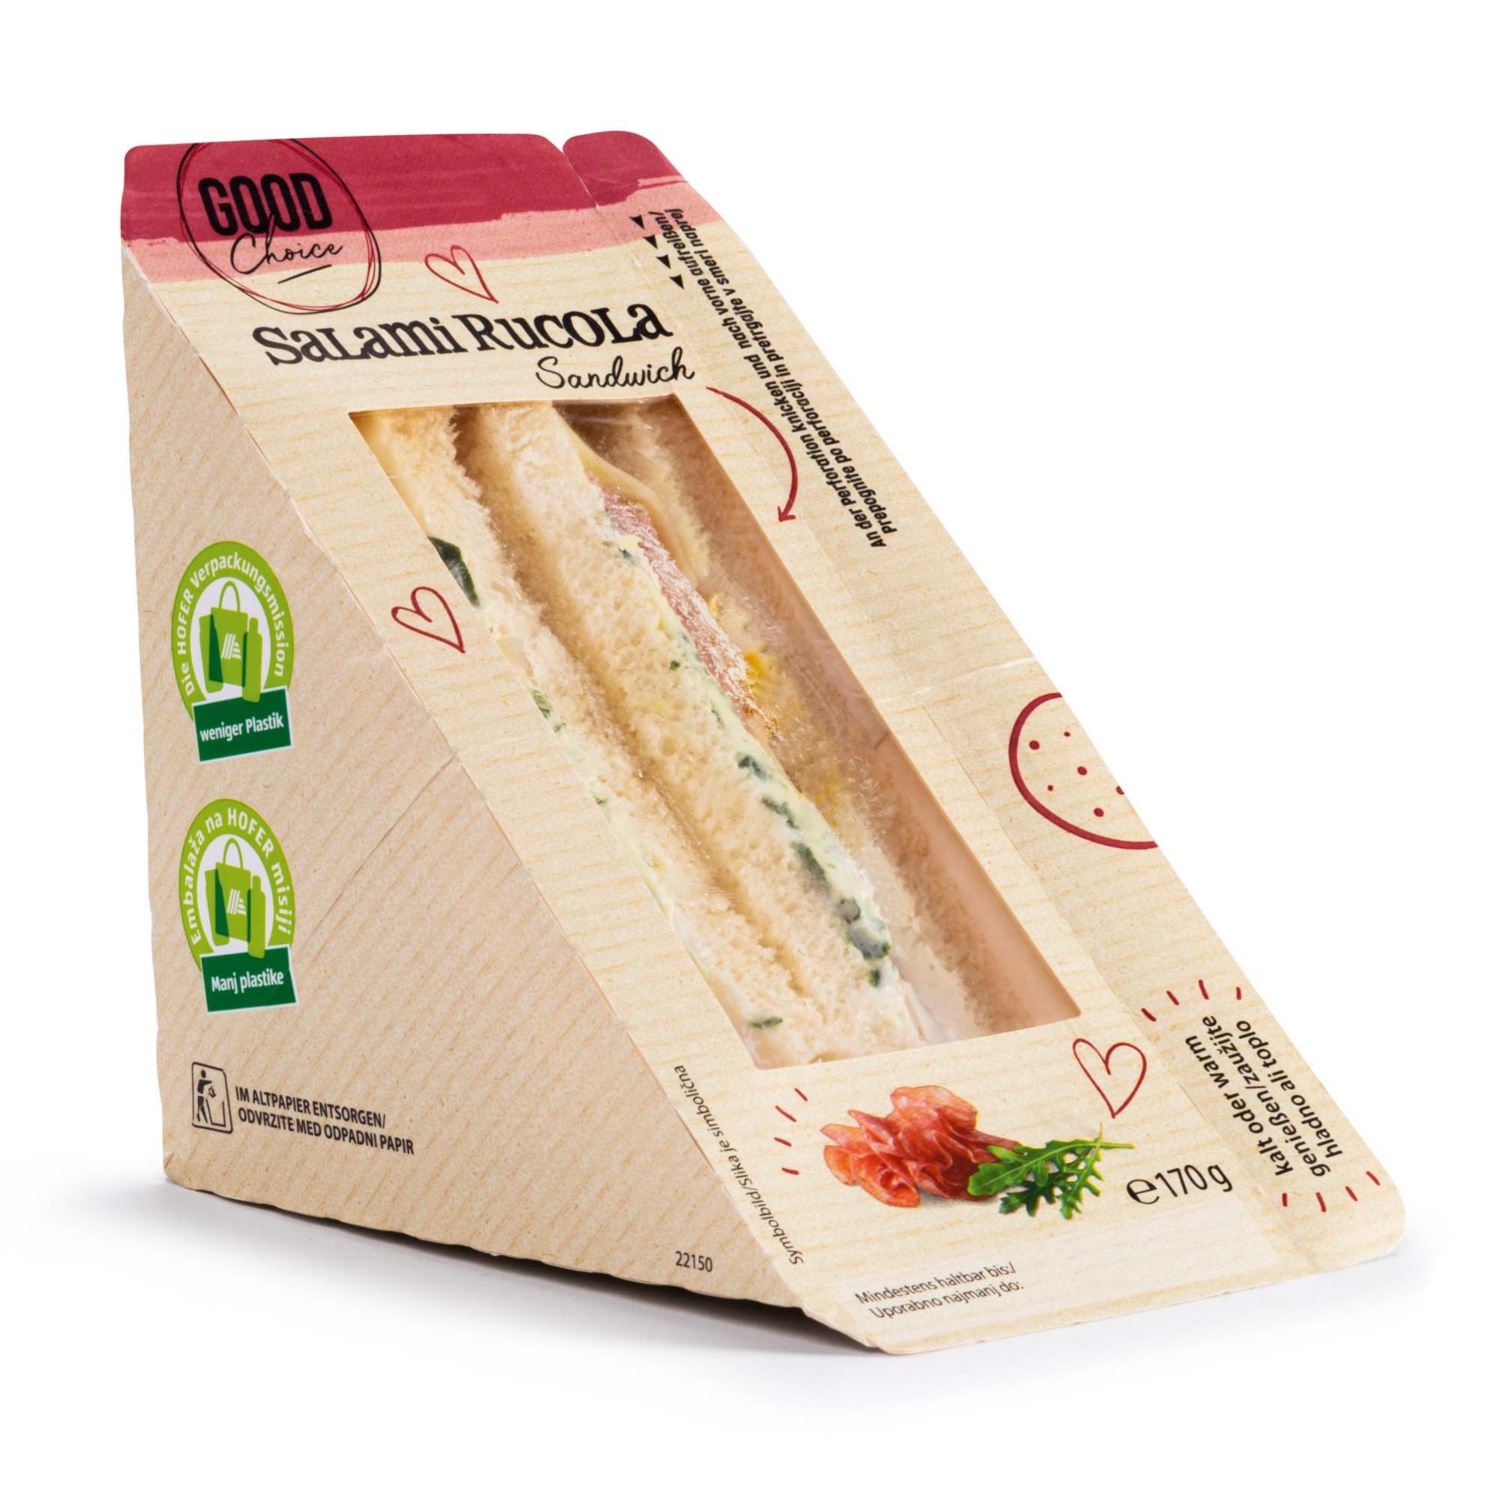 GOOD CHOICE Frisches Sandwich, Salami-Rucola